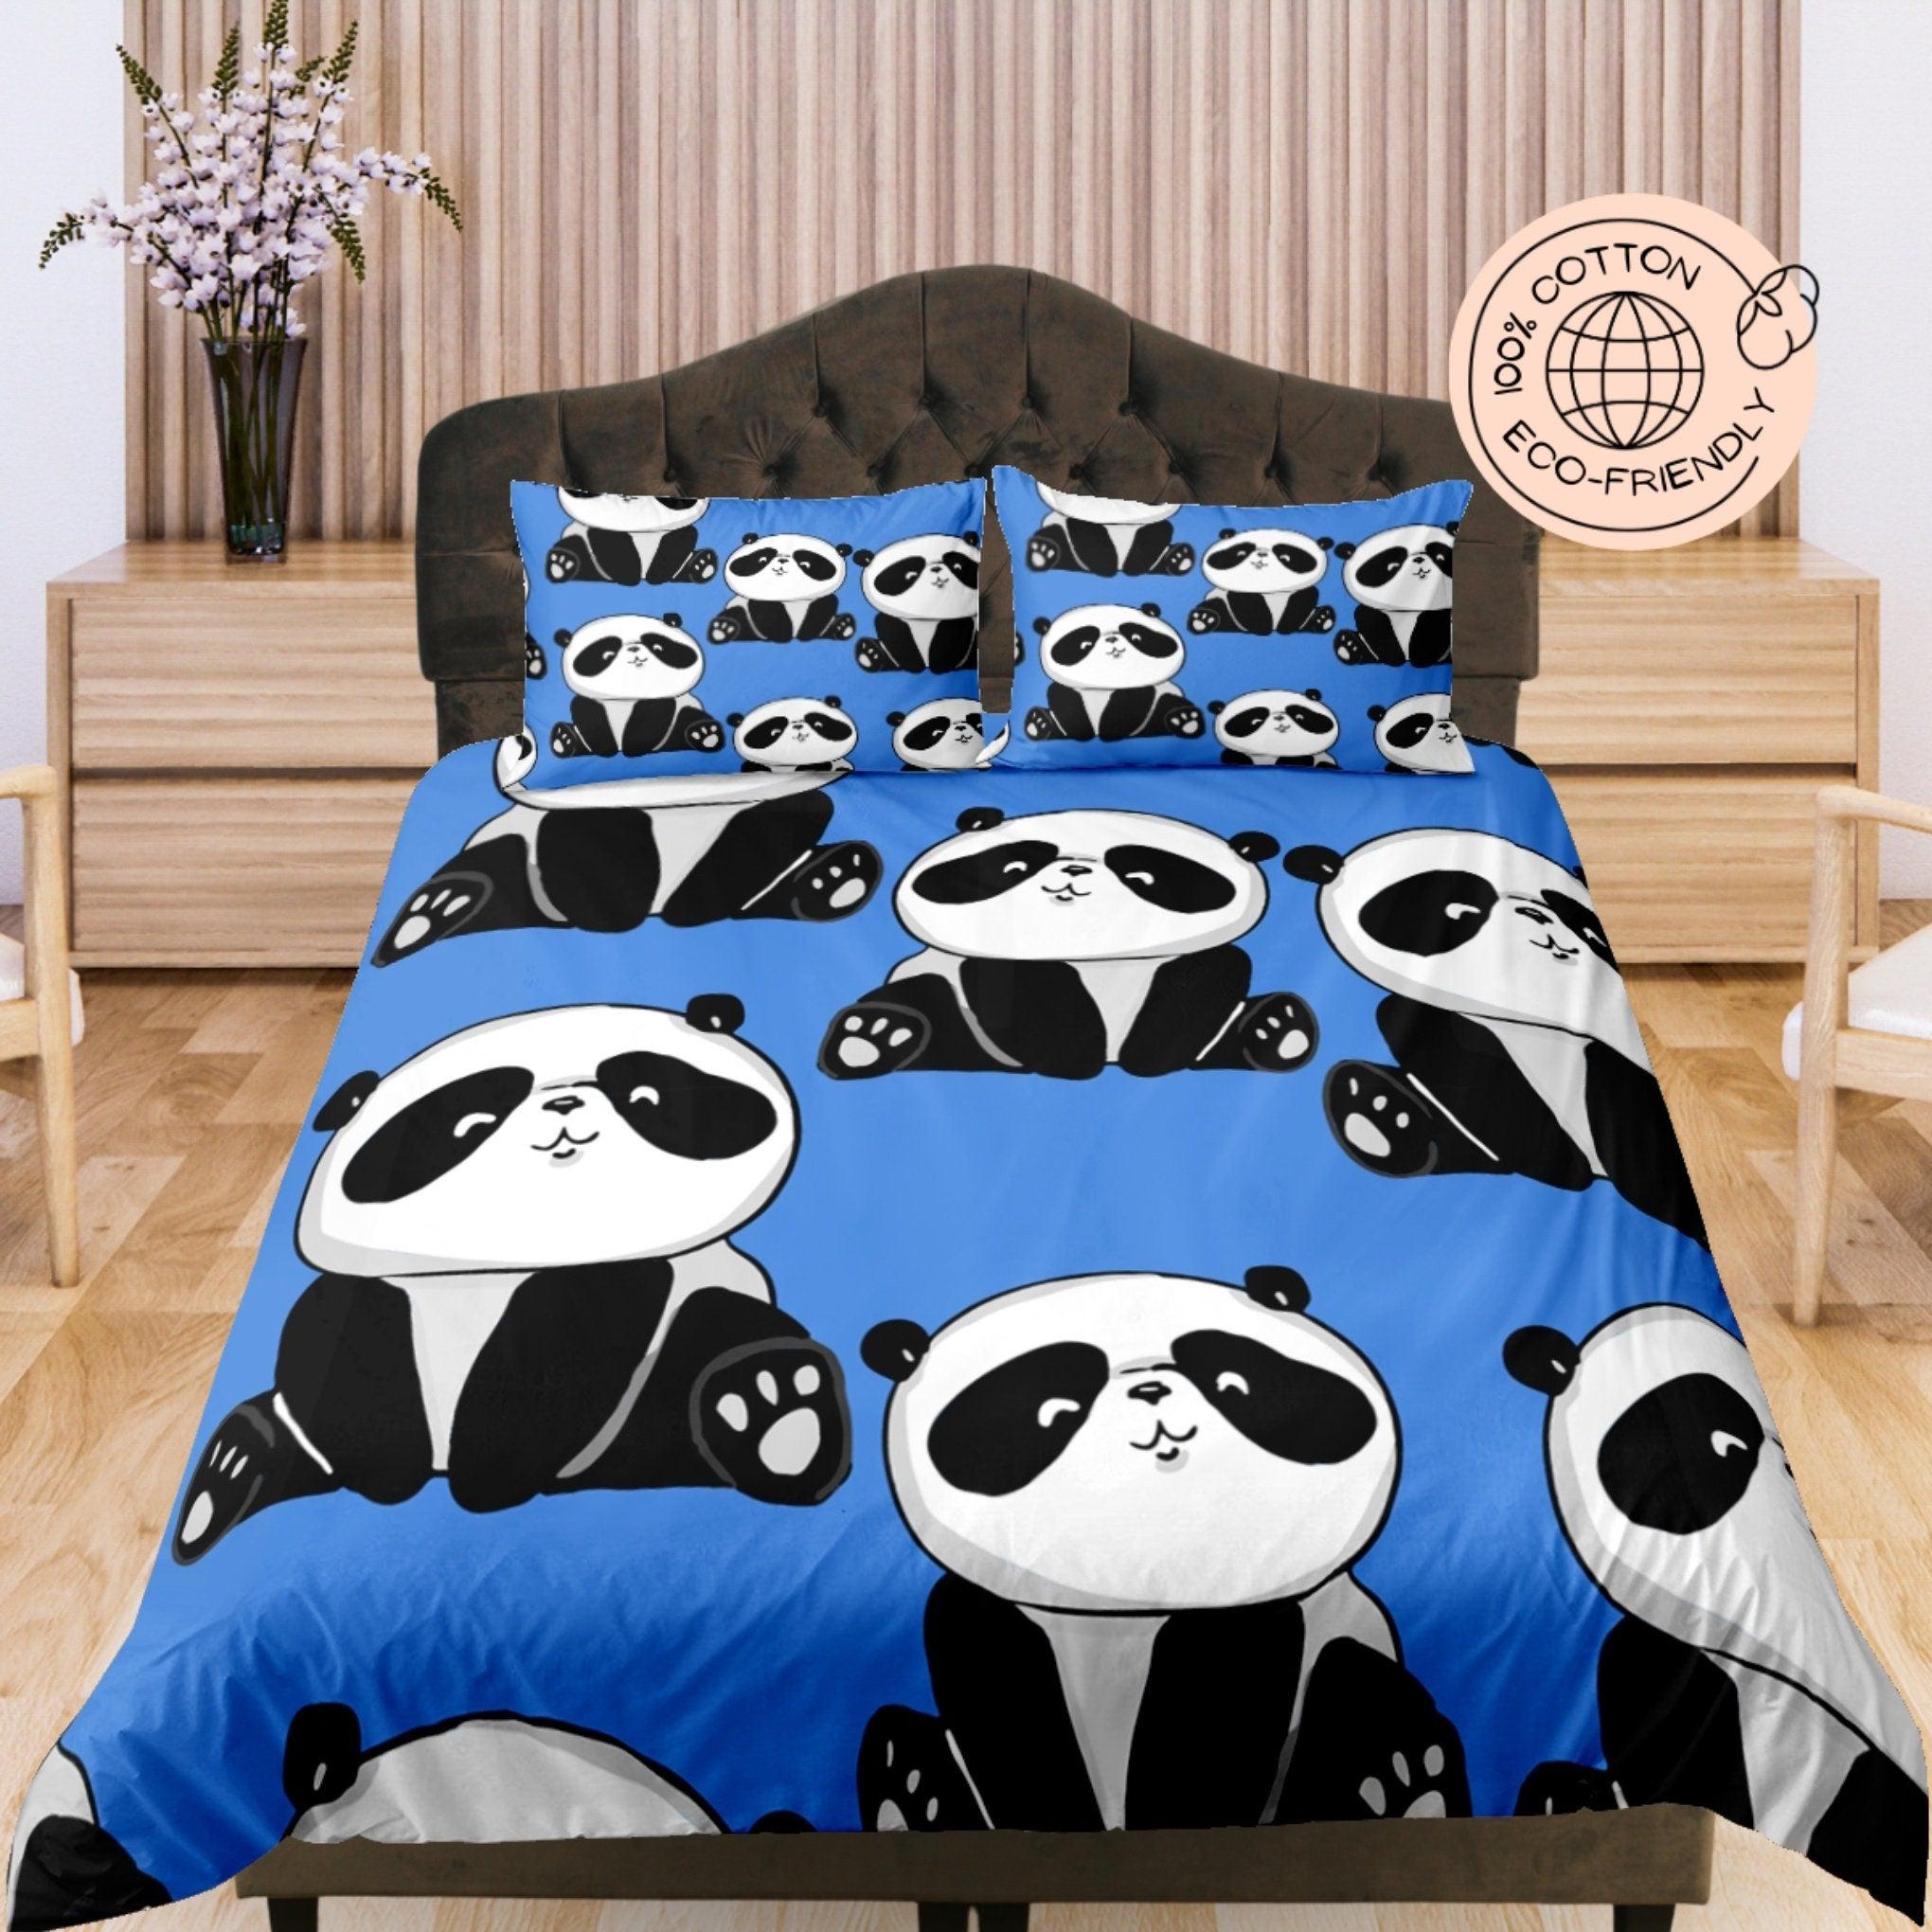 daintyduvet Sitting Cute Panda in Blue Cotton Duvet Cover Set for Kids, Toddler Bedding, Baby Zipper Bedding, Nursery Cotton Bedding, Crib Blanket